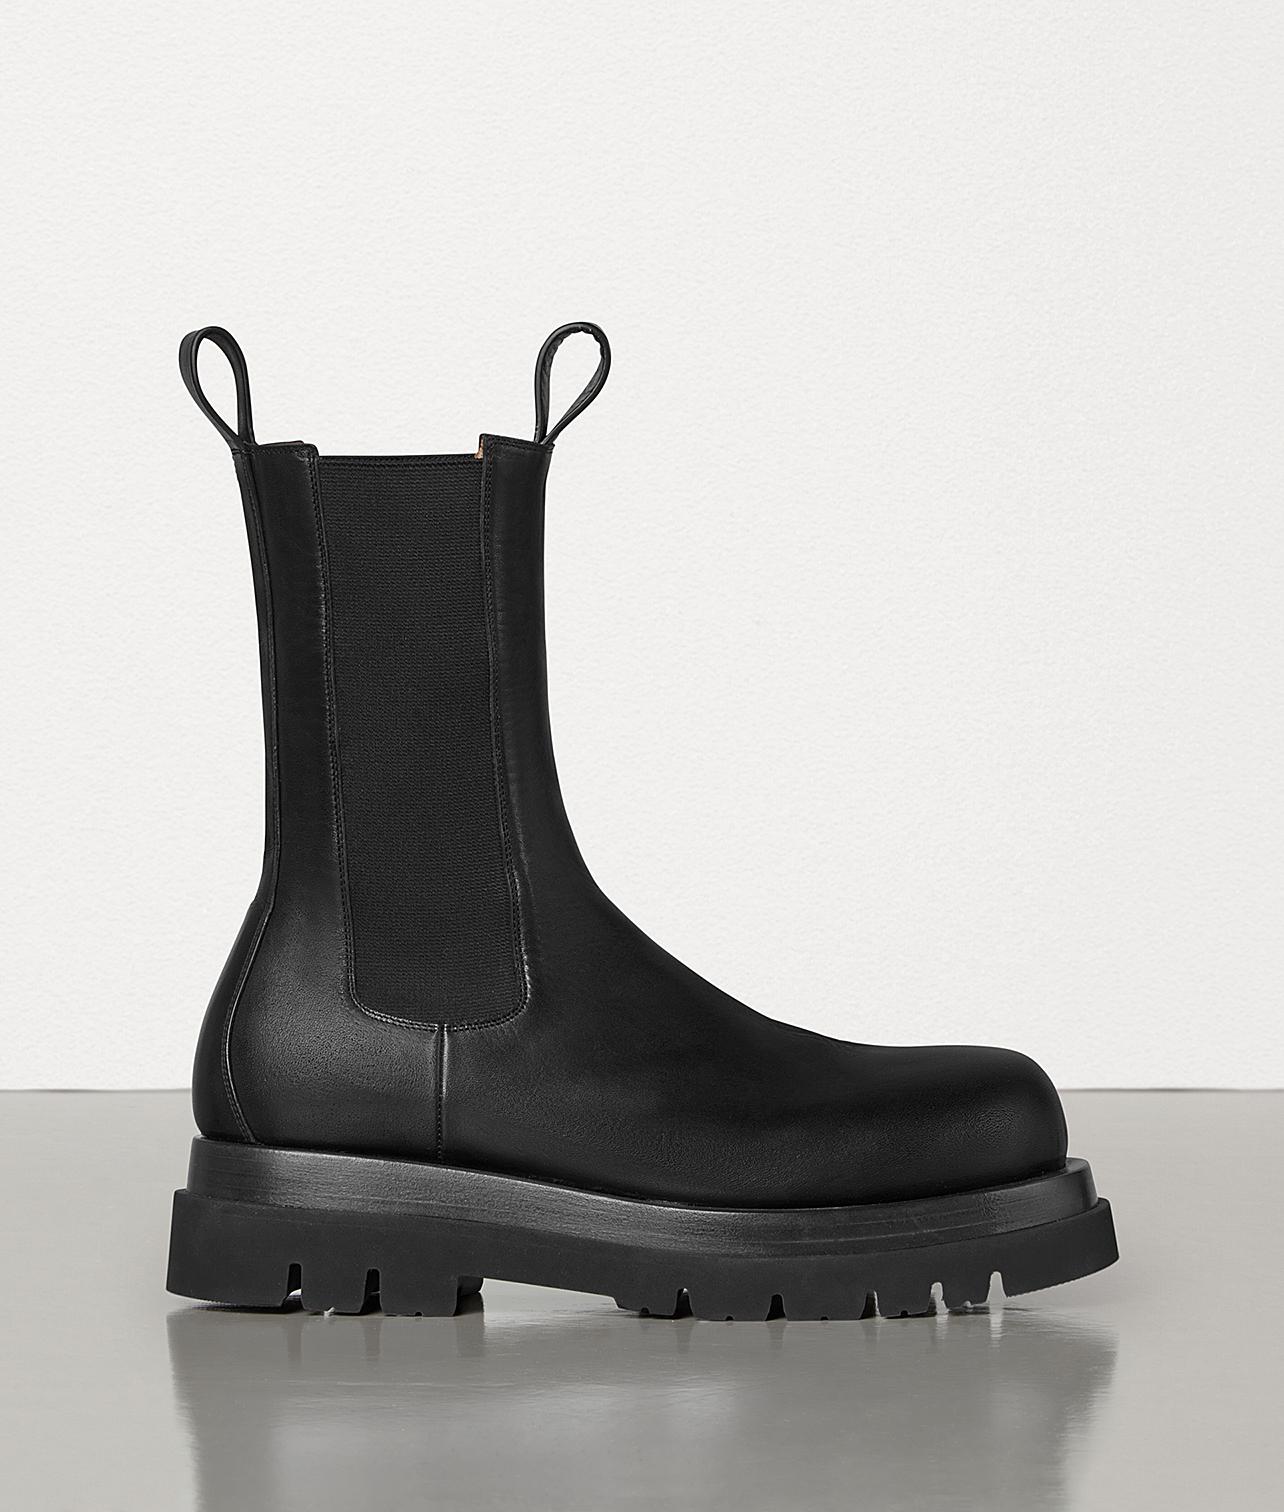 Bottega Veneta Leather Bv Lug Boots in Nero (Black) - Lyst